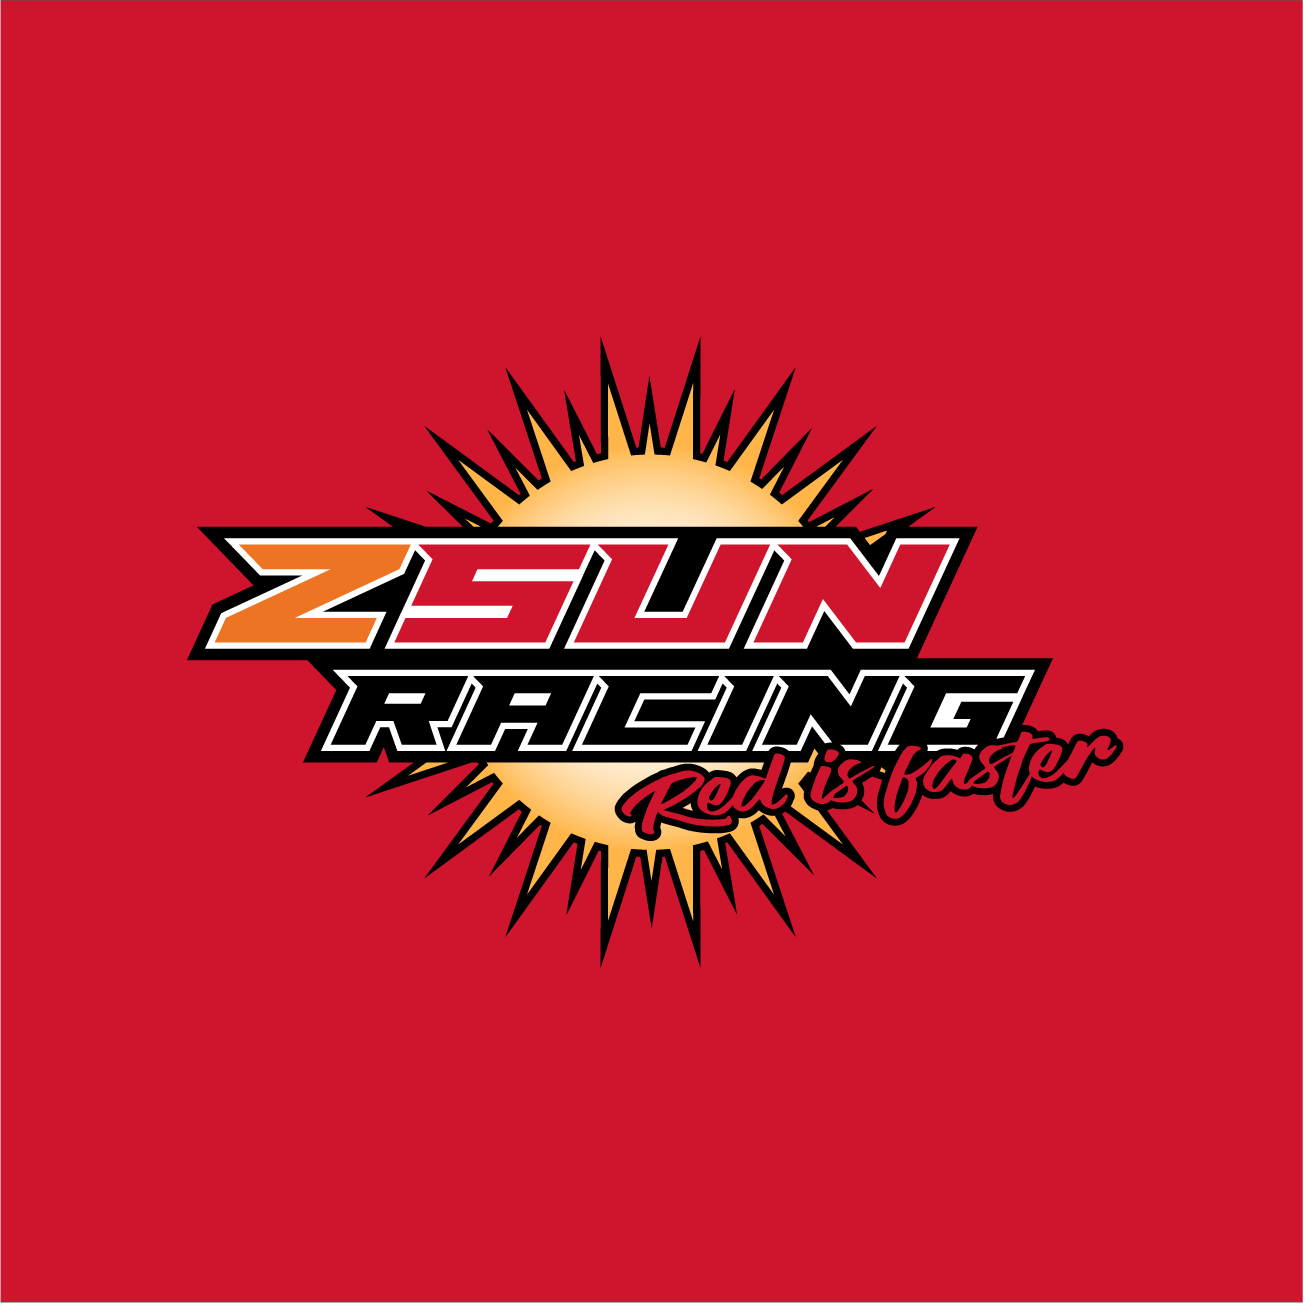 Club Image for ZSUN RACING